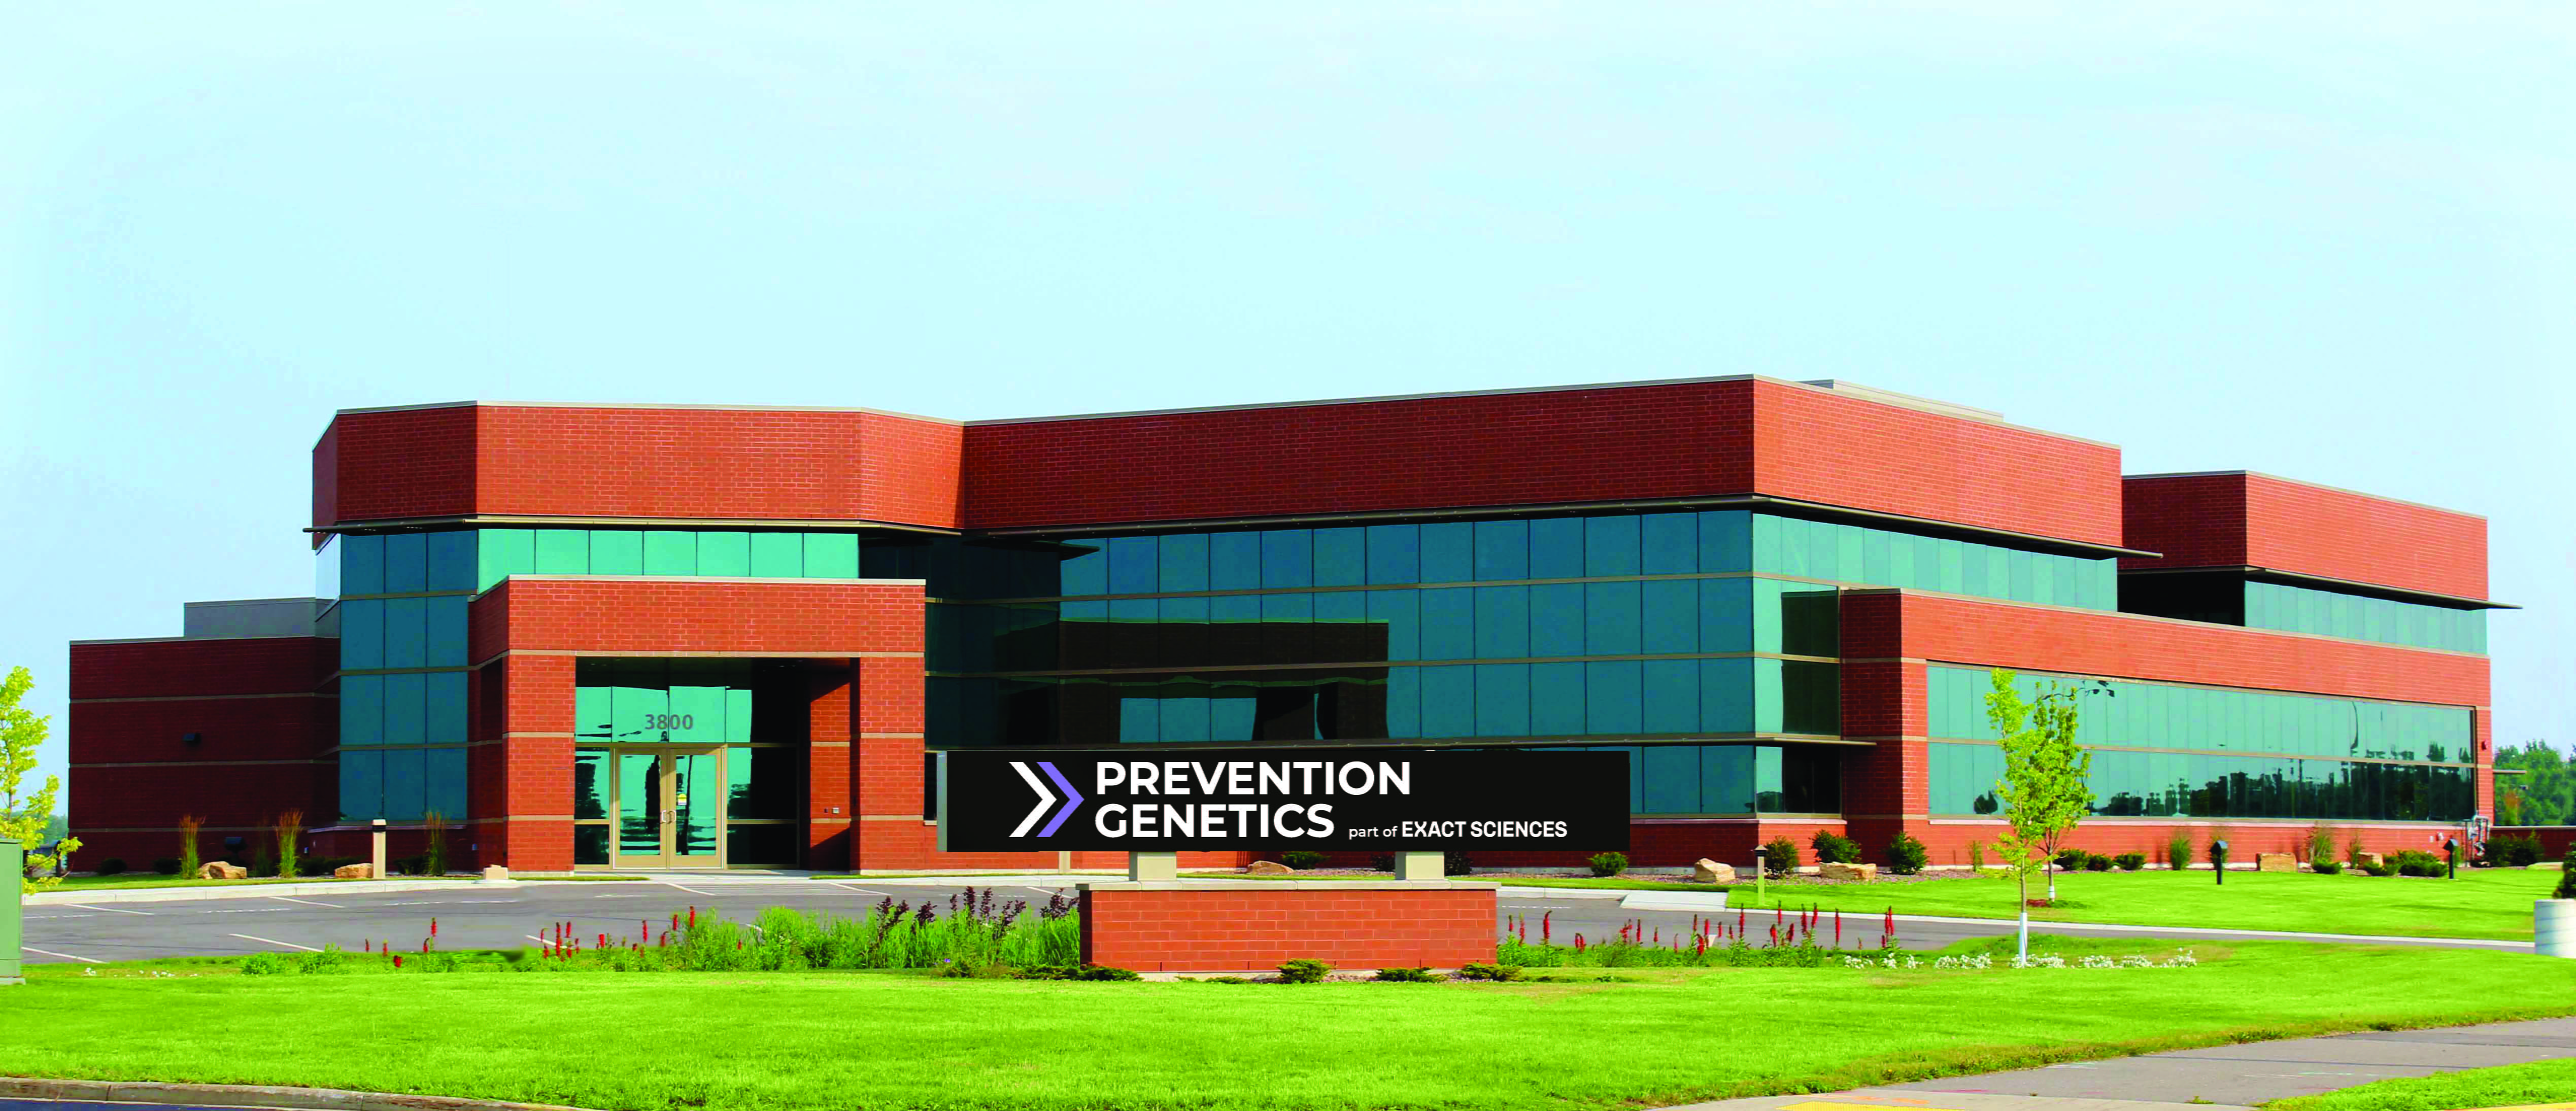 Exterior of PreventionGenetics headquarters